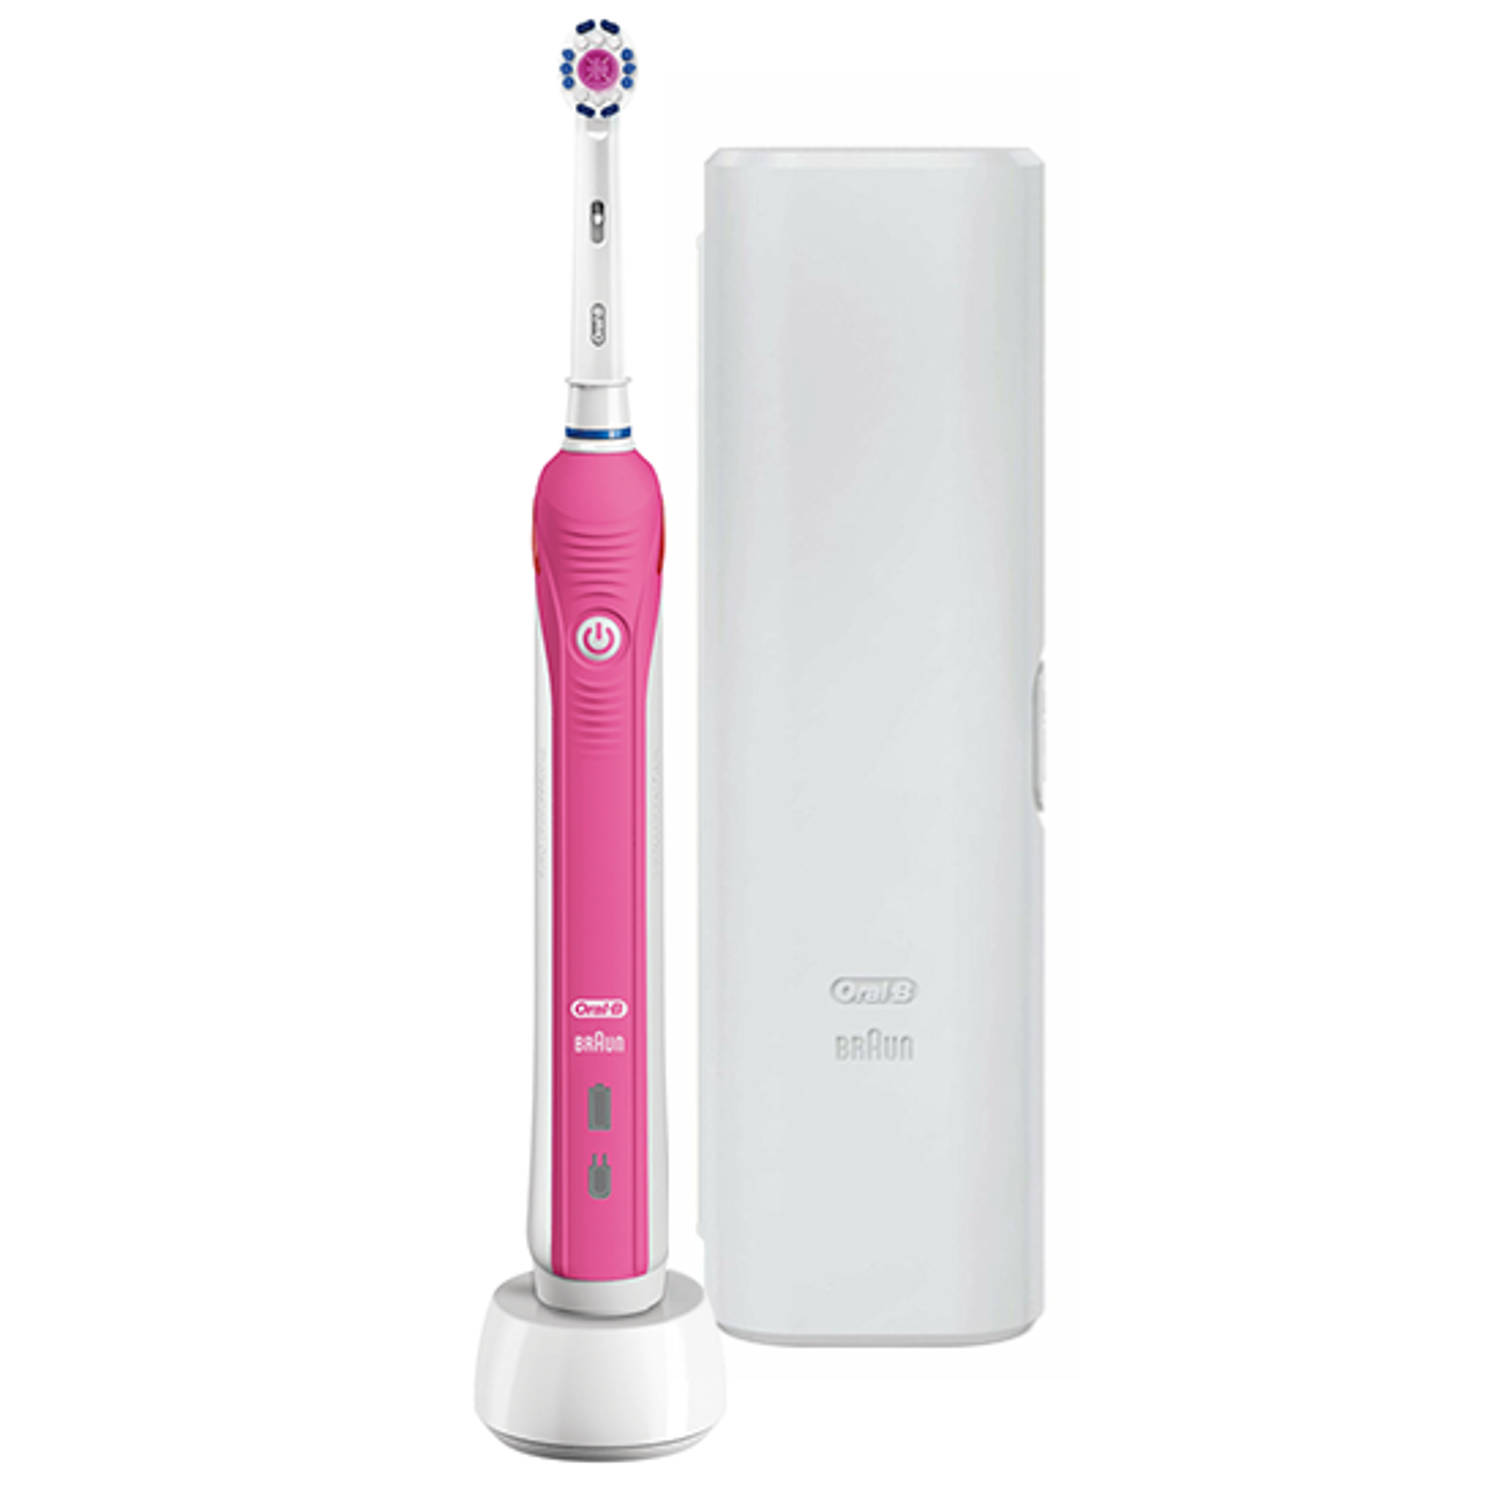 Oral-B elektrische tandenborstel Pro 2 2500 roze incl. reisetui - 2 poetsstanden